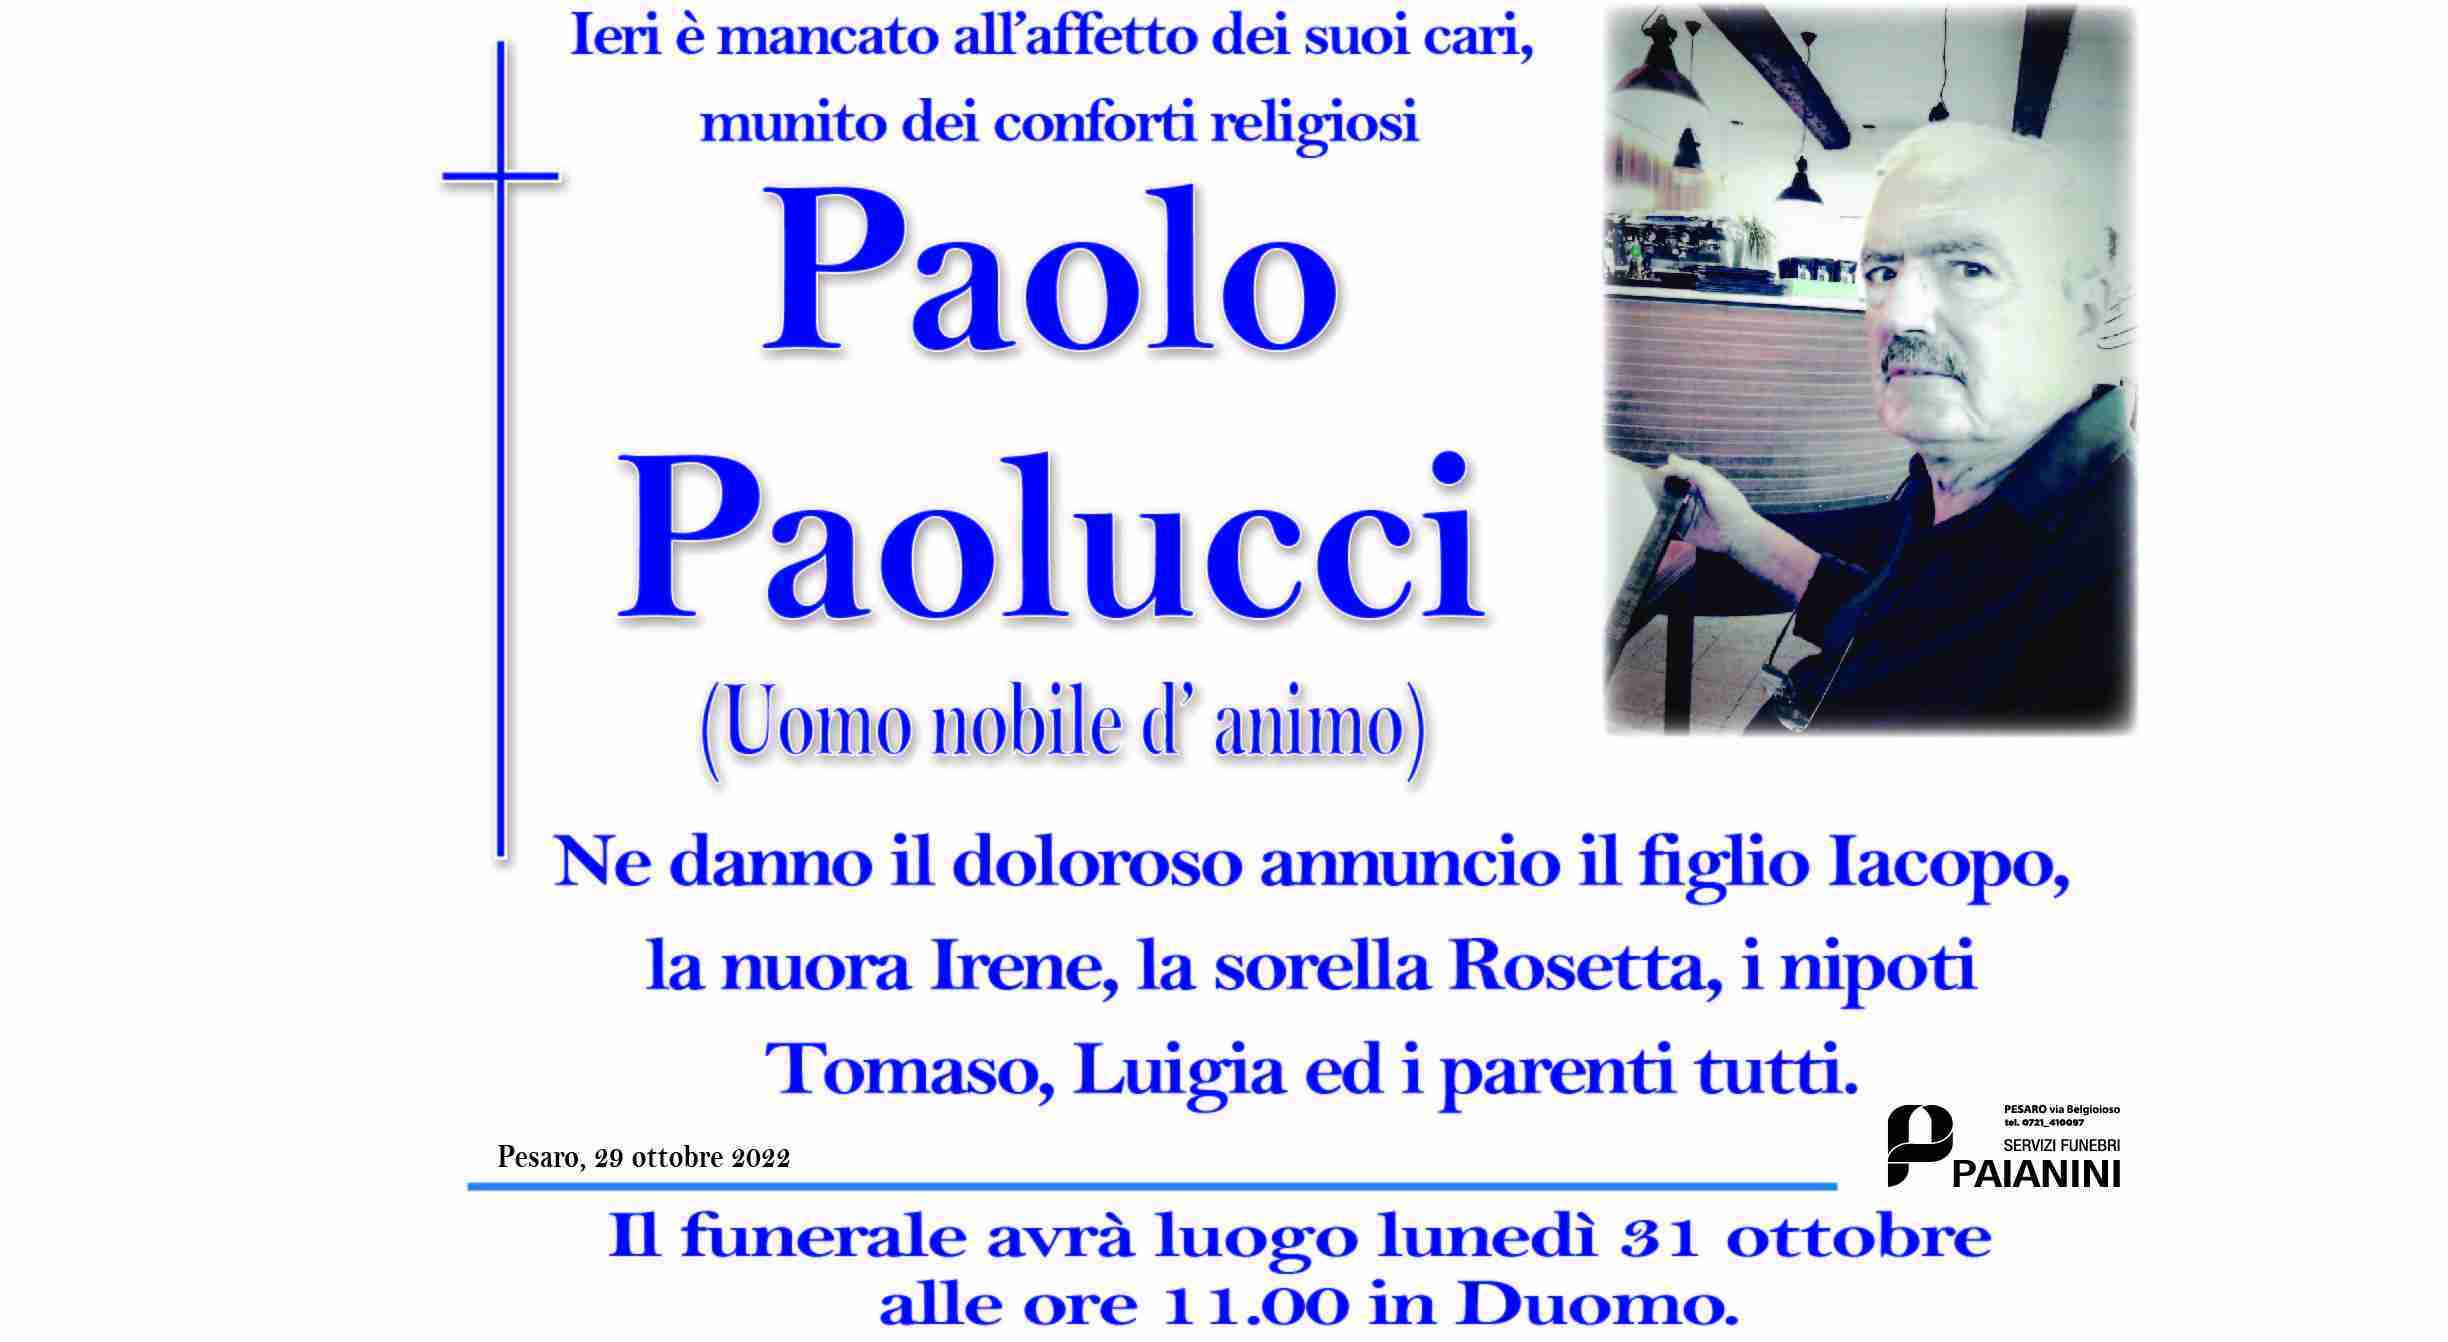 Paolo Paolucci